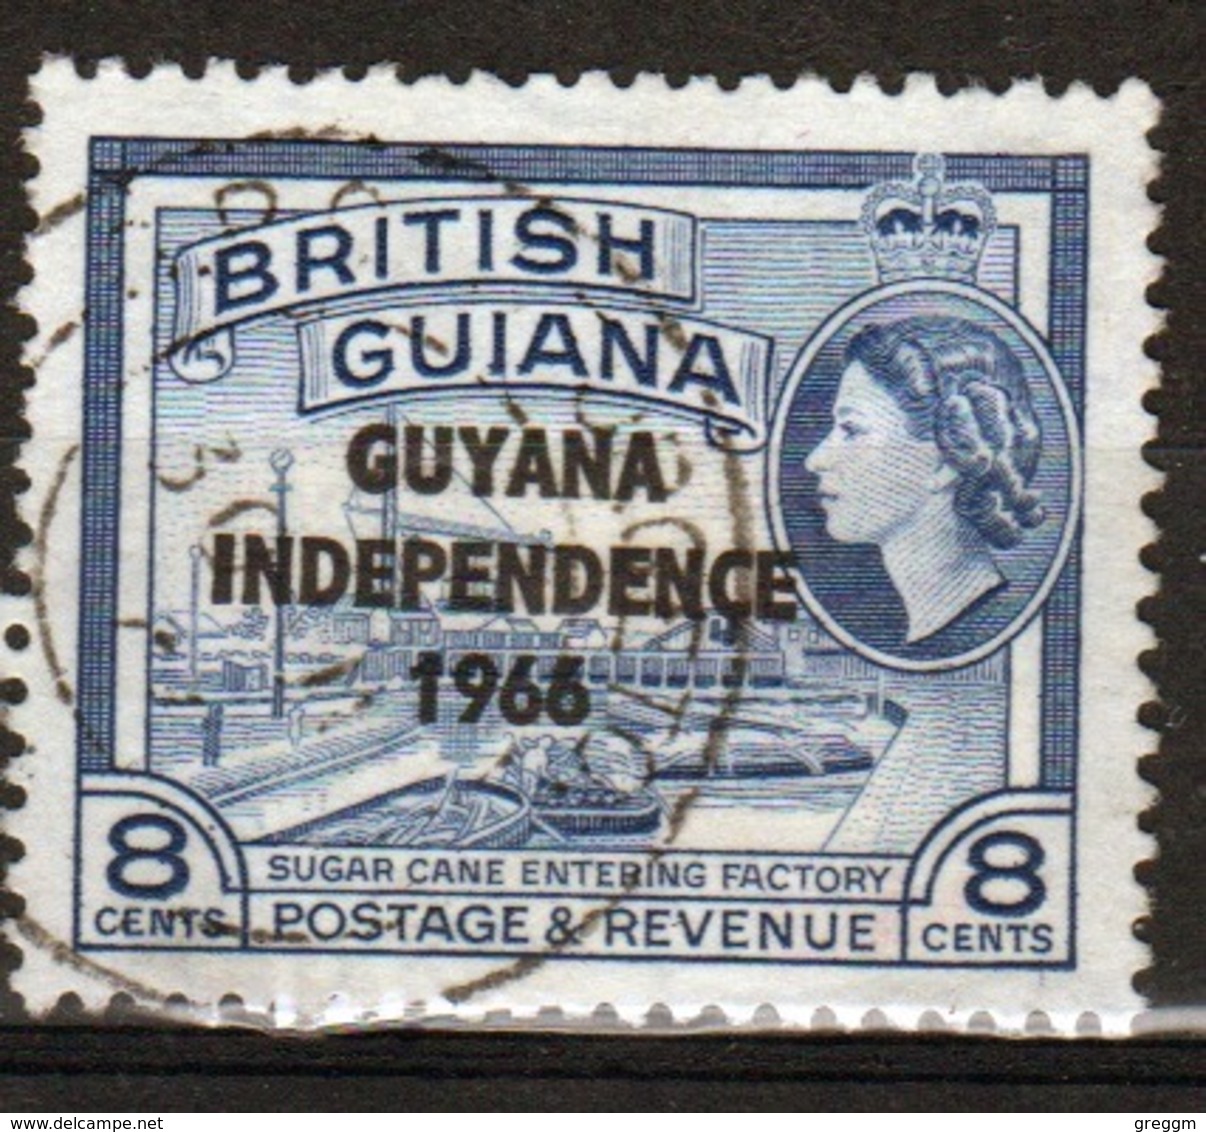 Guyana 1966 Single 8c Stamp From The British Guiana Definitive Series Overprinted For Guyana. - Guyana (1966-...)